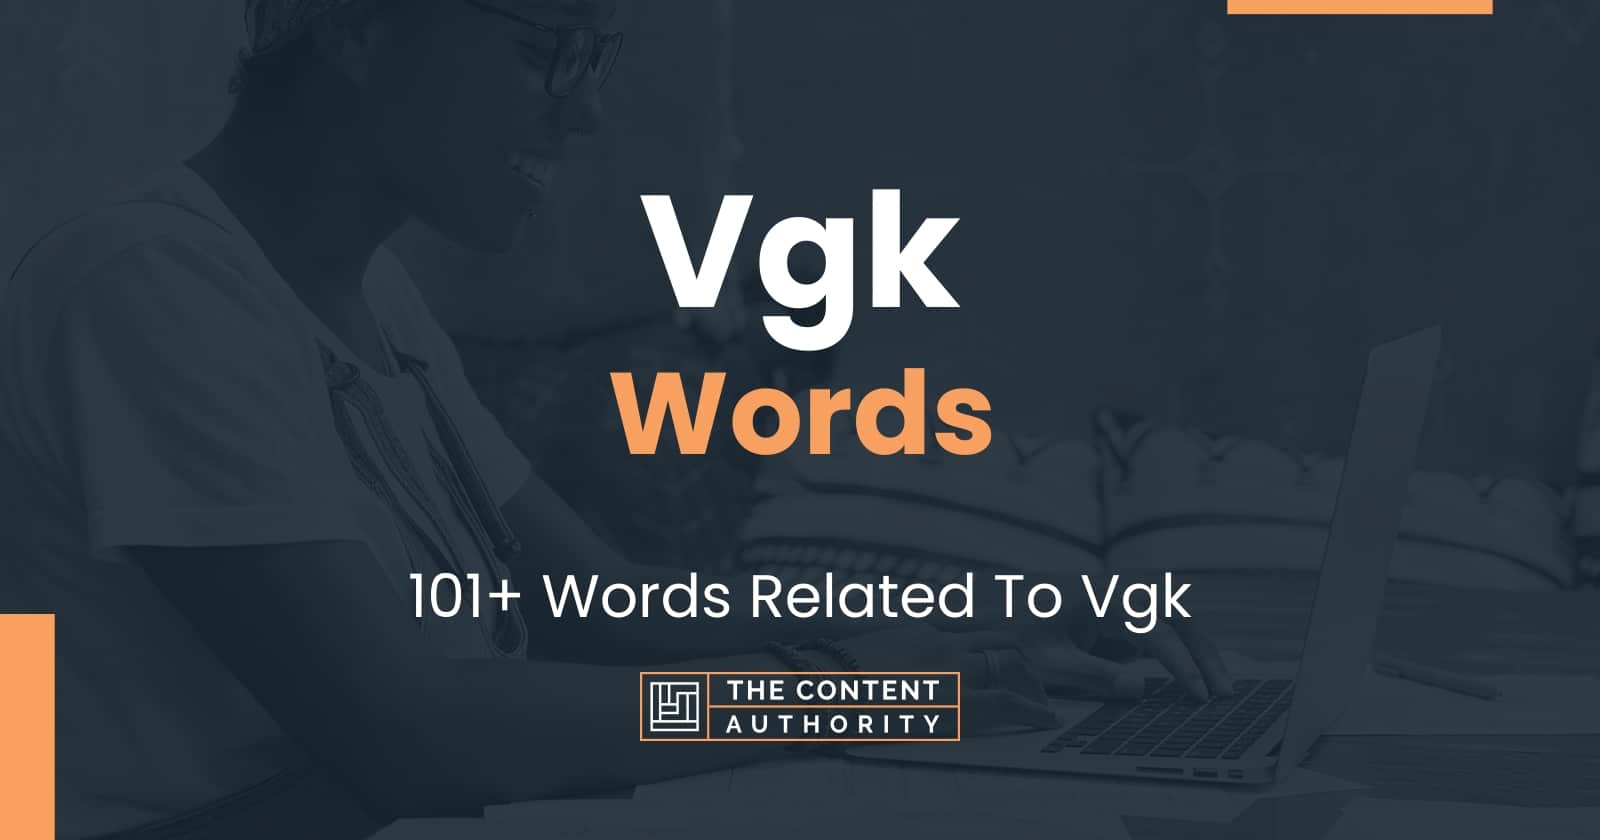 Vgk Words 101+ Words Related To Vgk